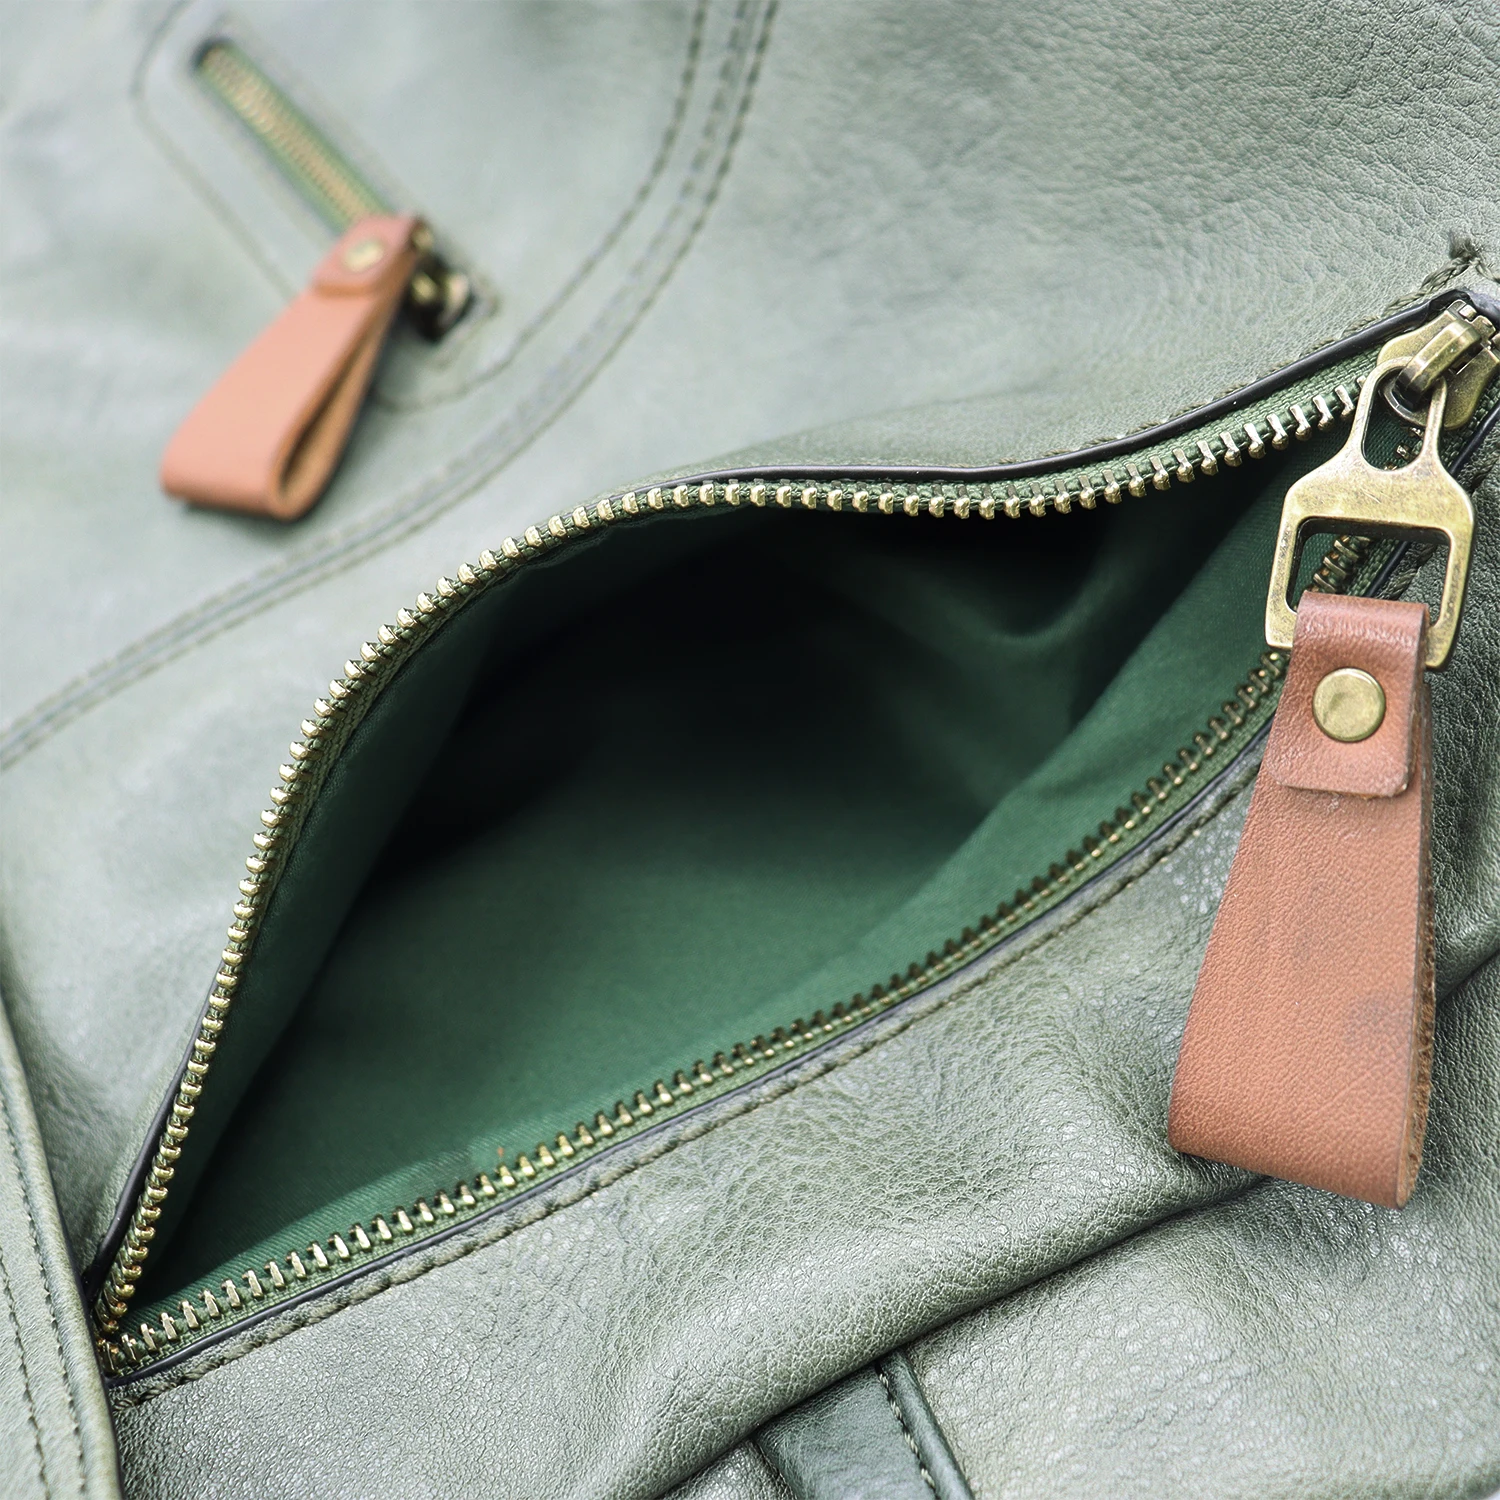 Wilslat Women Backpack Purse Leather Anti-theft Casual Shoulder Bag Ladies Satchel Bags Fits 13.3 Inch Laptop Brown